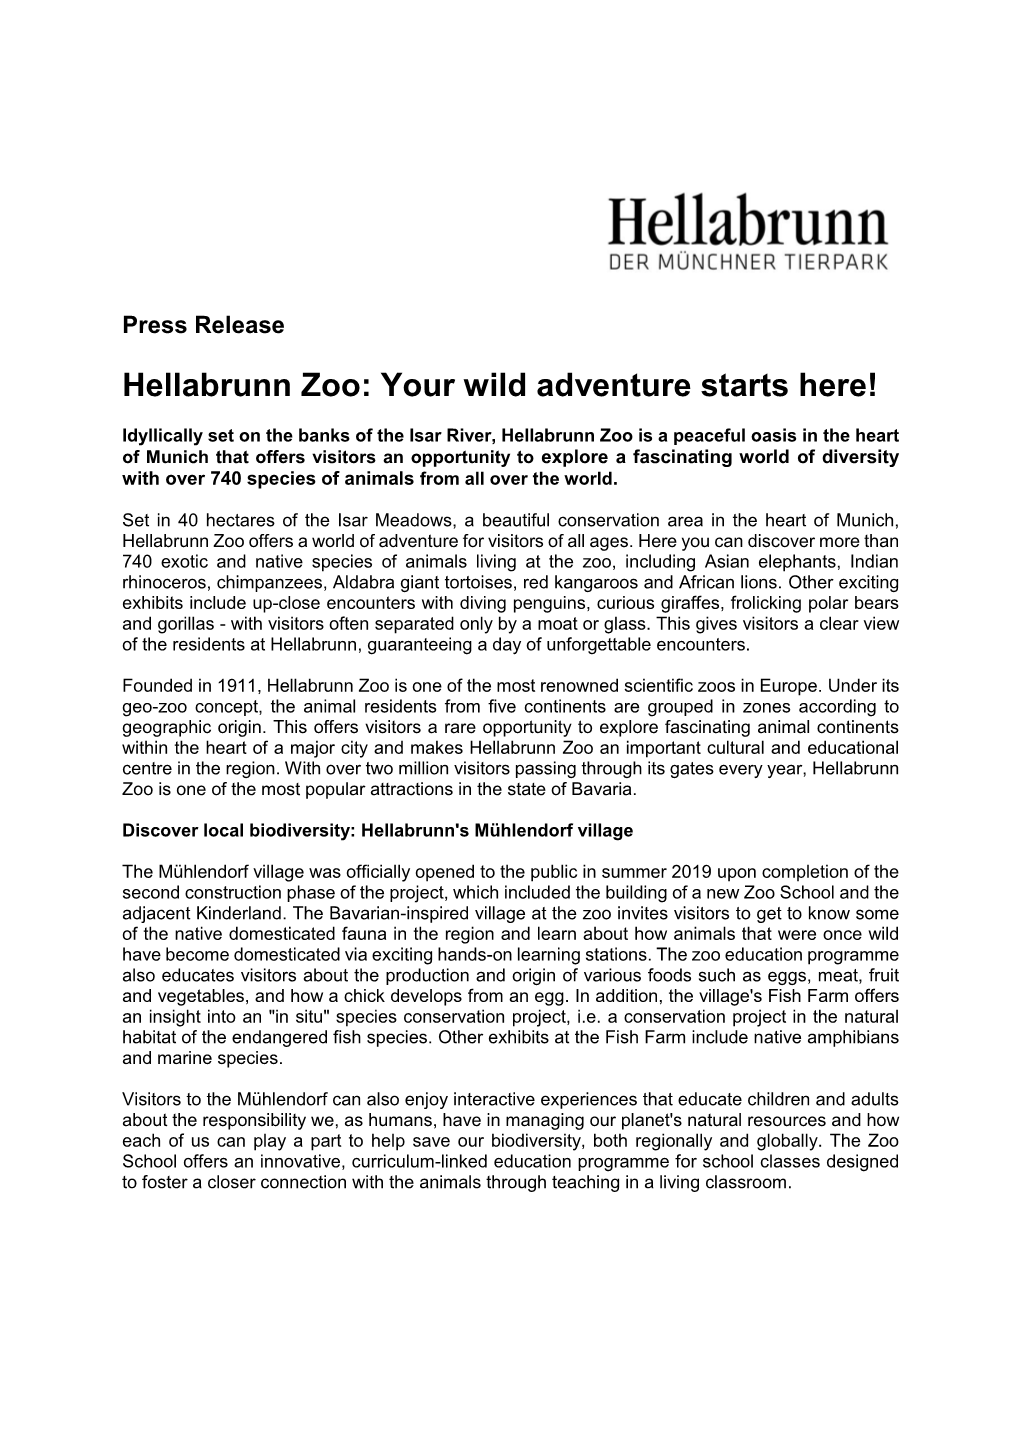 Hellabrunn Zoo: Your Wild Adventure Starts Here!